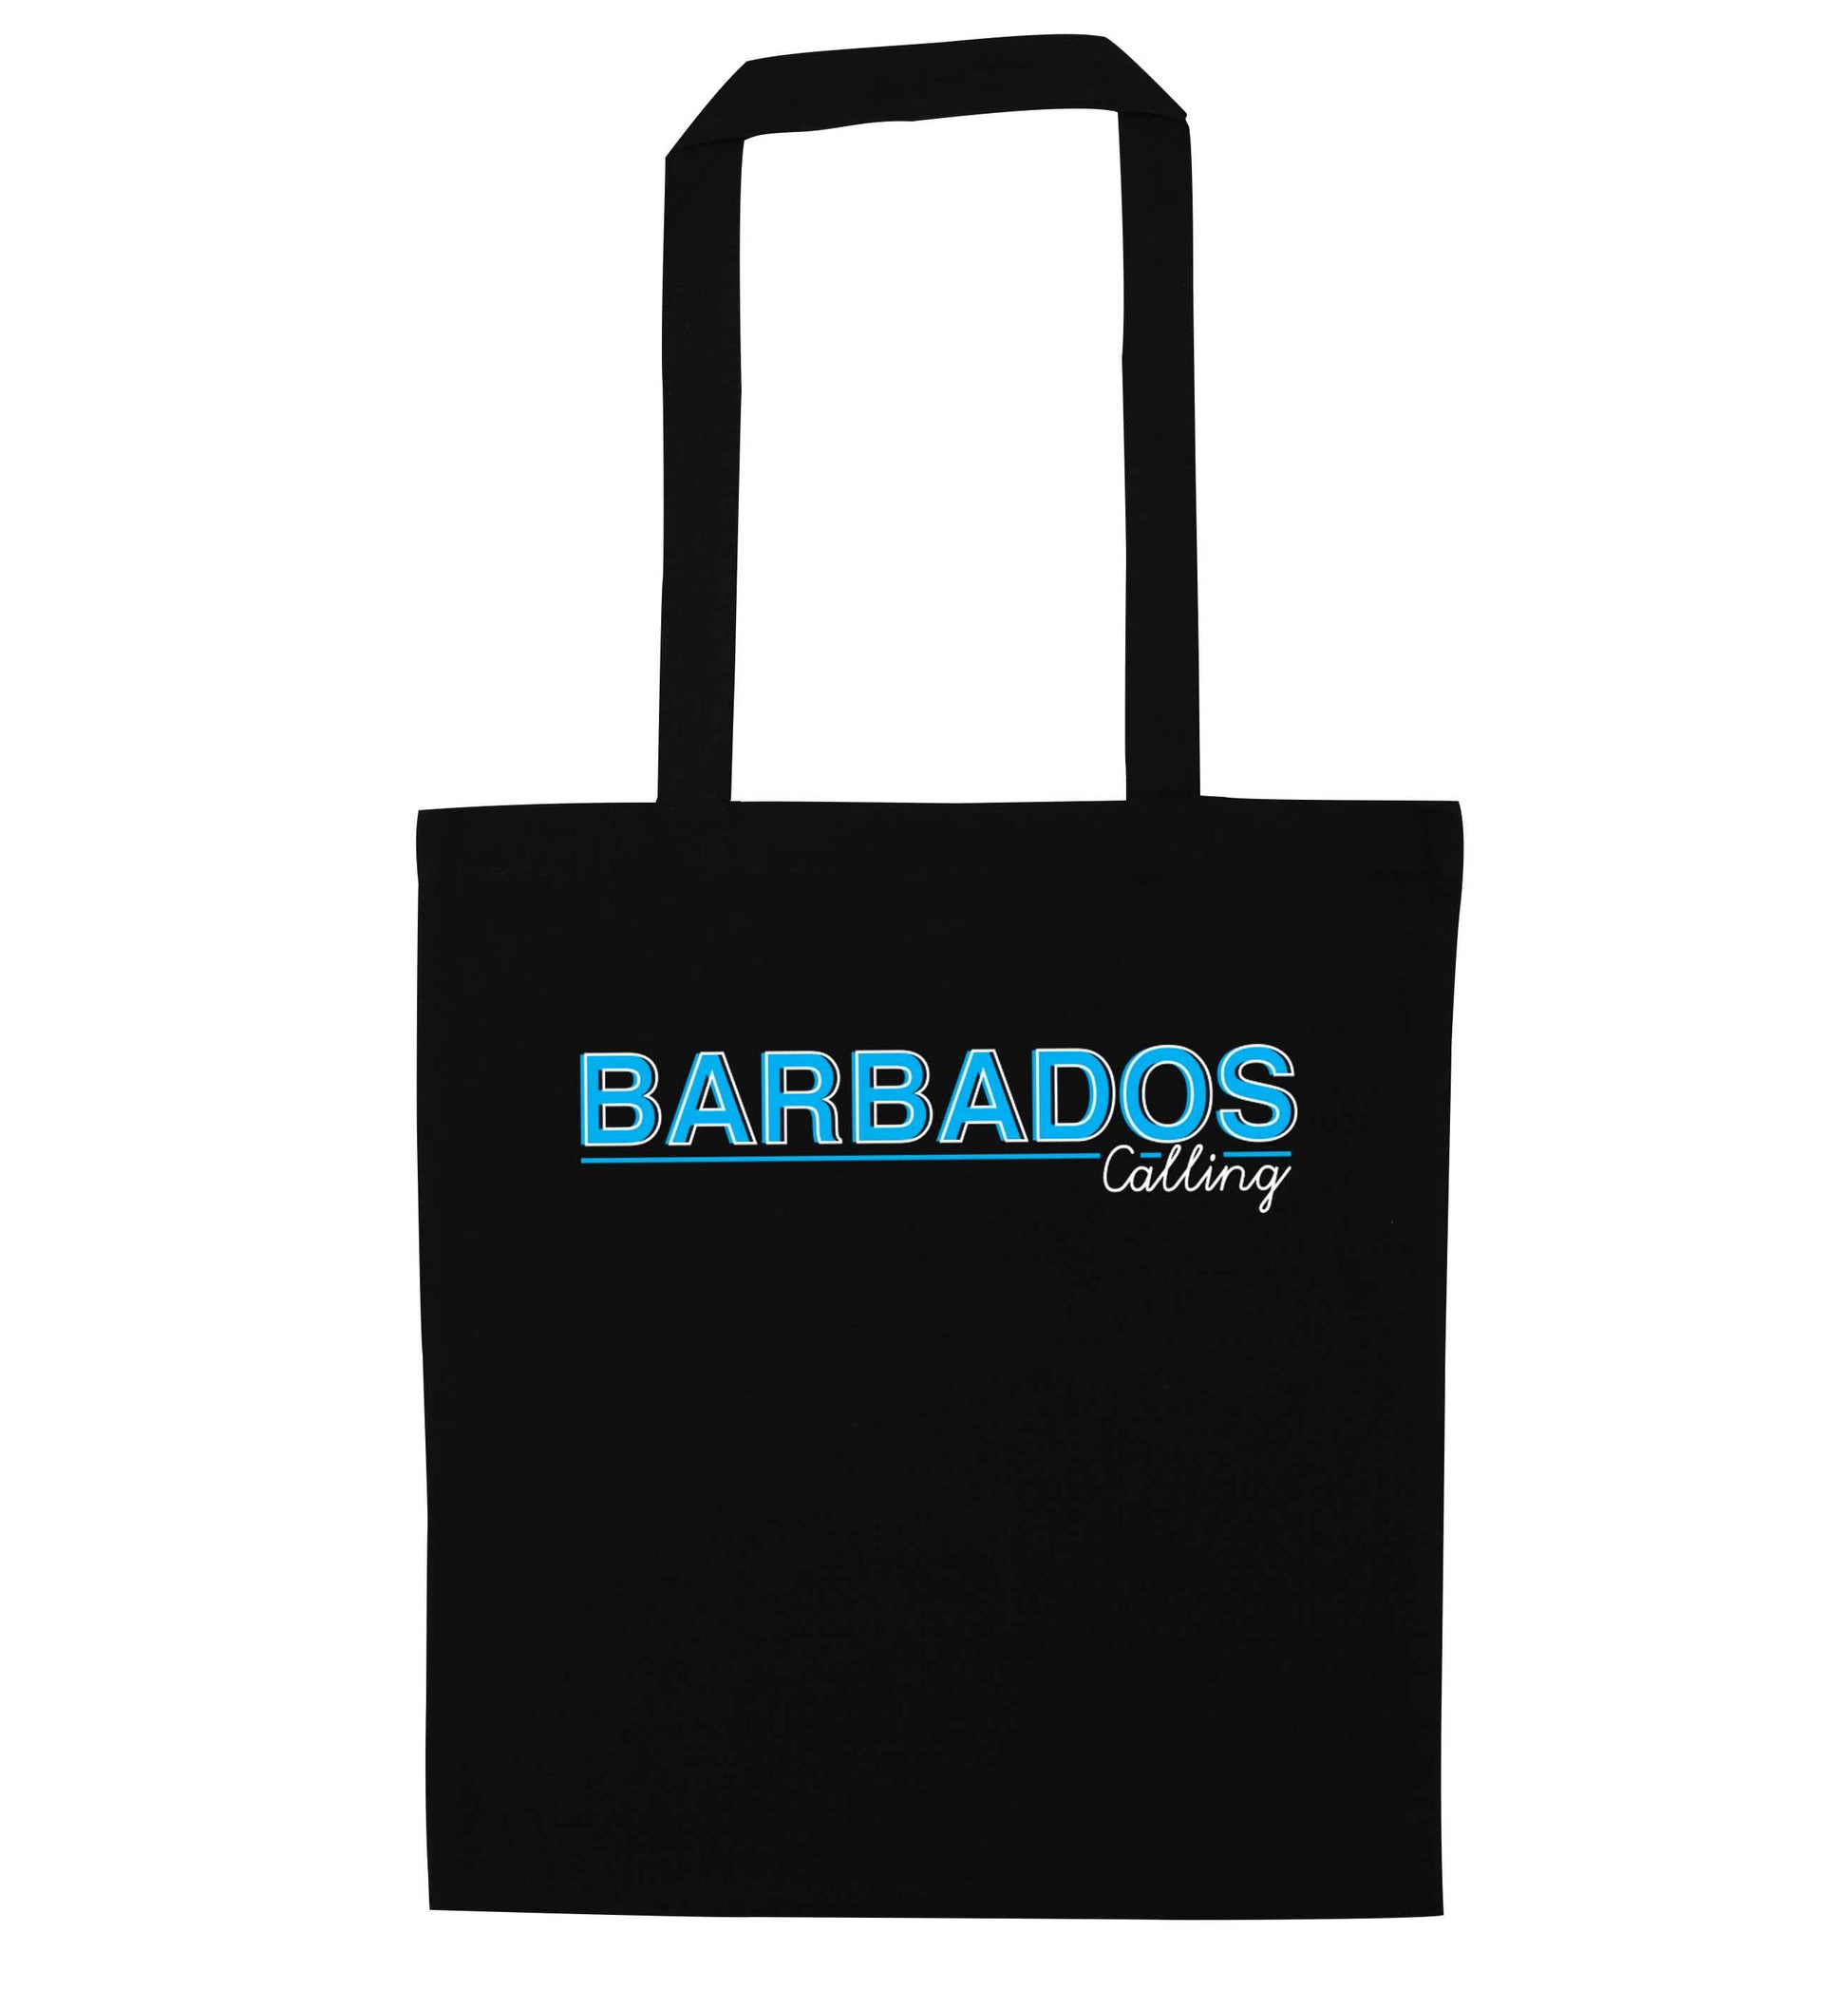 Barbados calling black tote bag